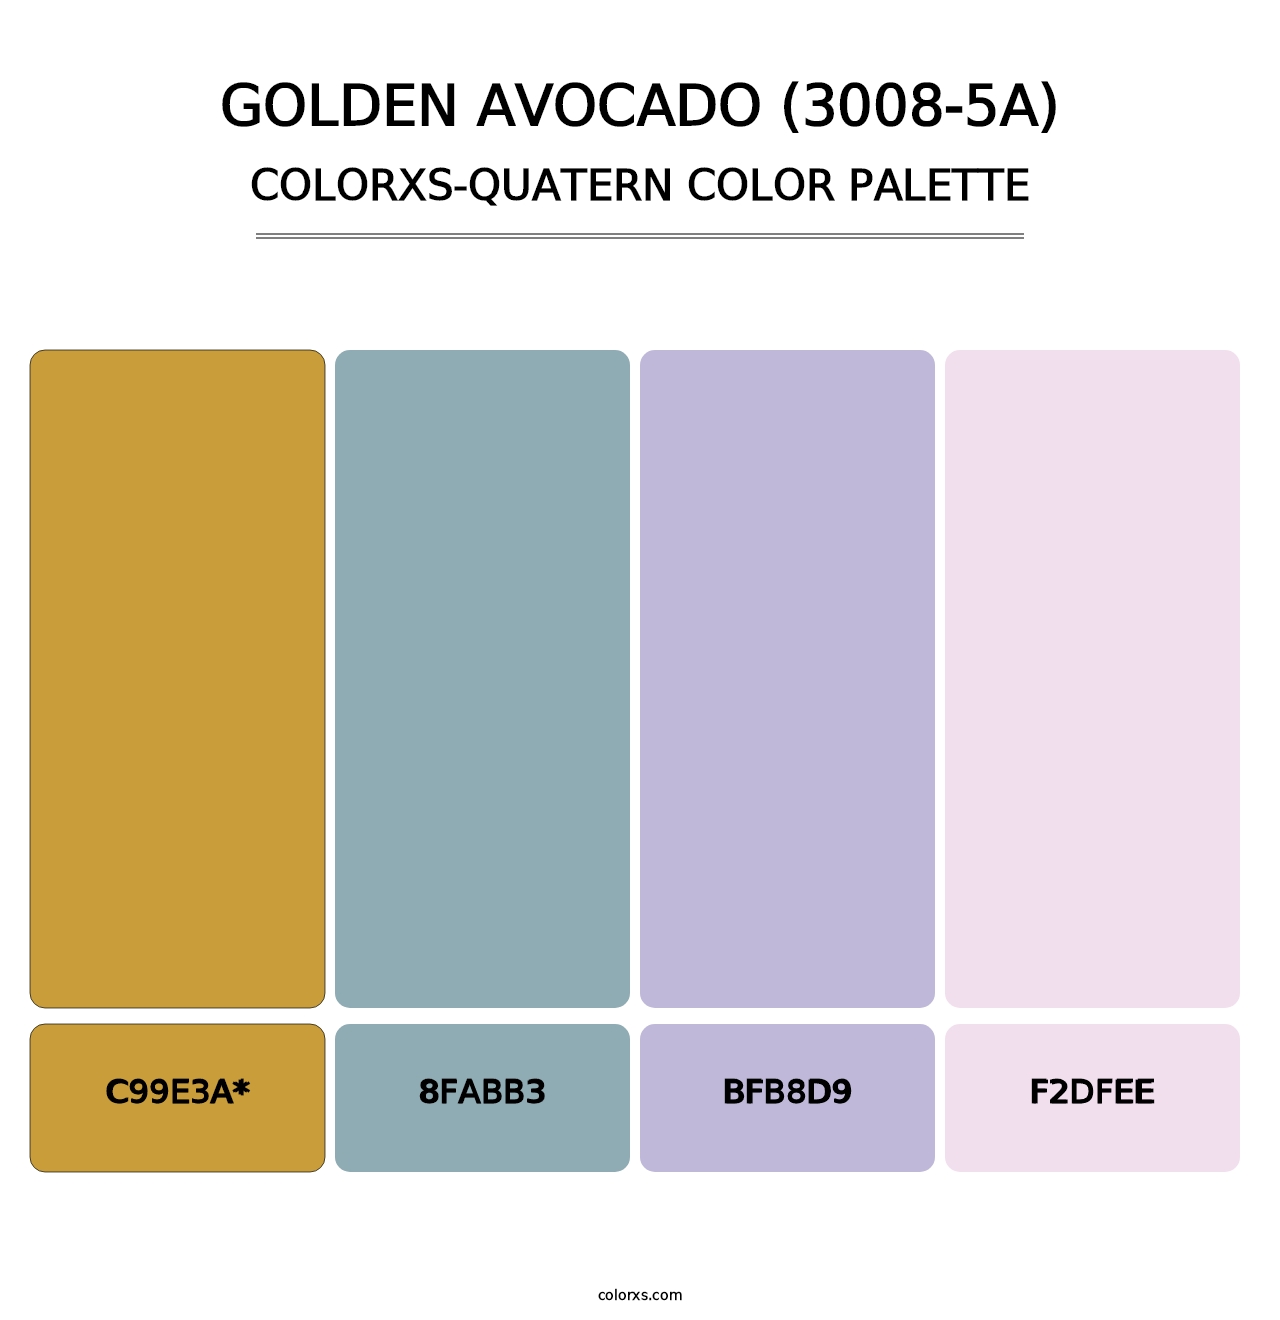 Golden Avocado (3008-5A) - Colorxs Quatern Palette